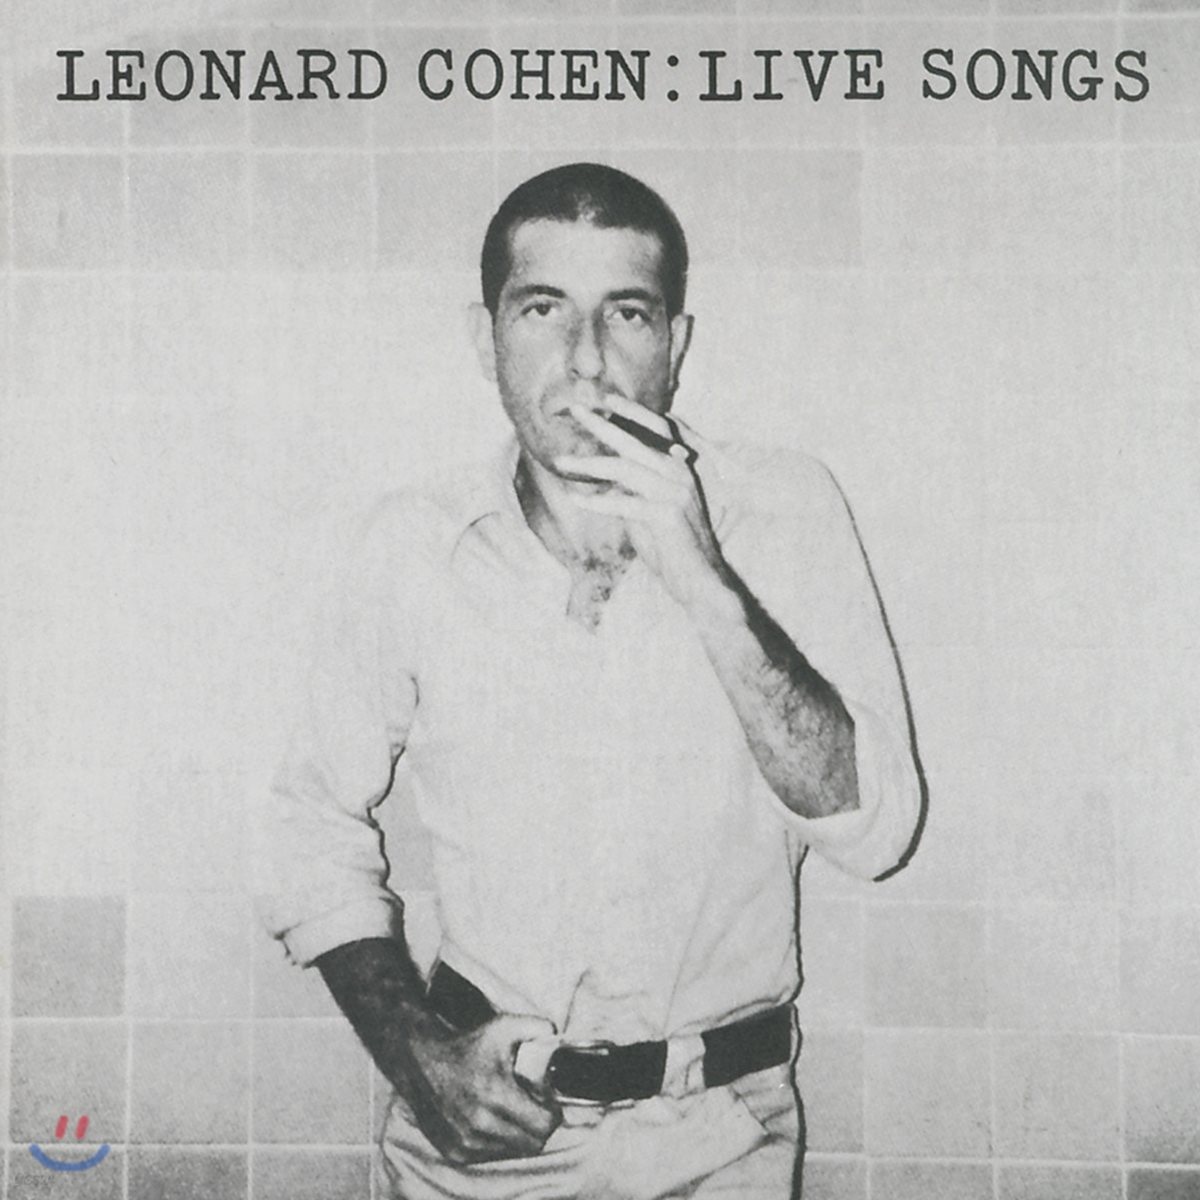 Leonard Cohen (레너드 코헨) - Leonard Cohen: Live Songs [LP]